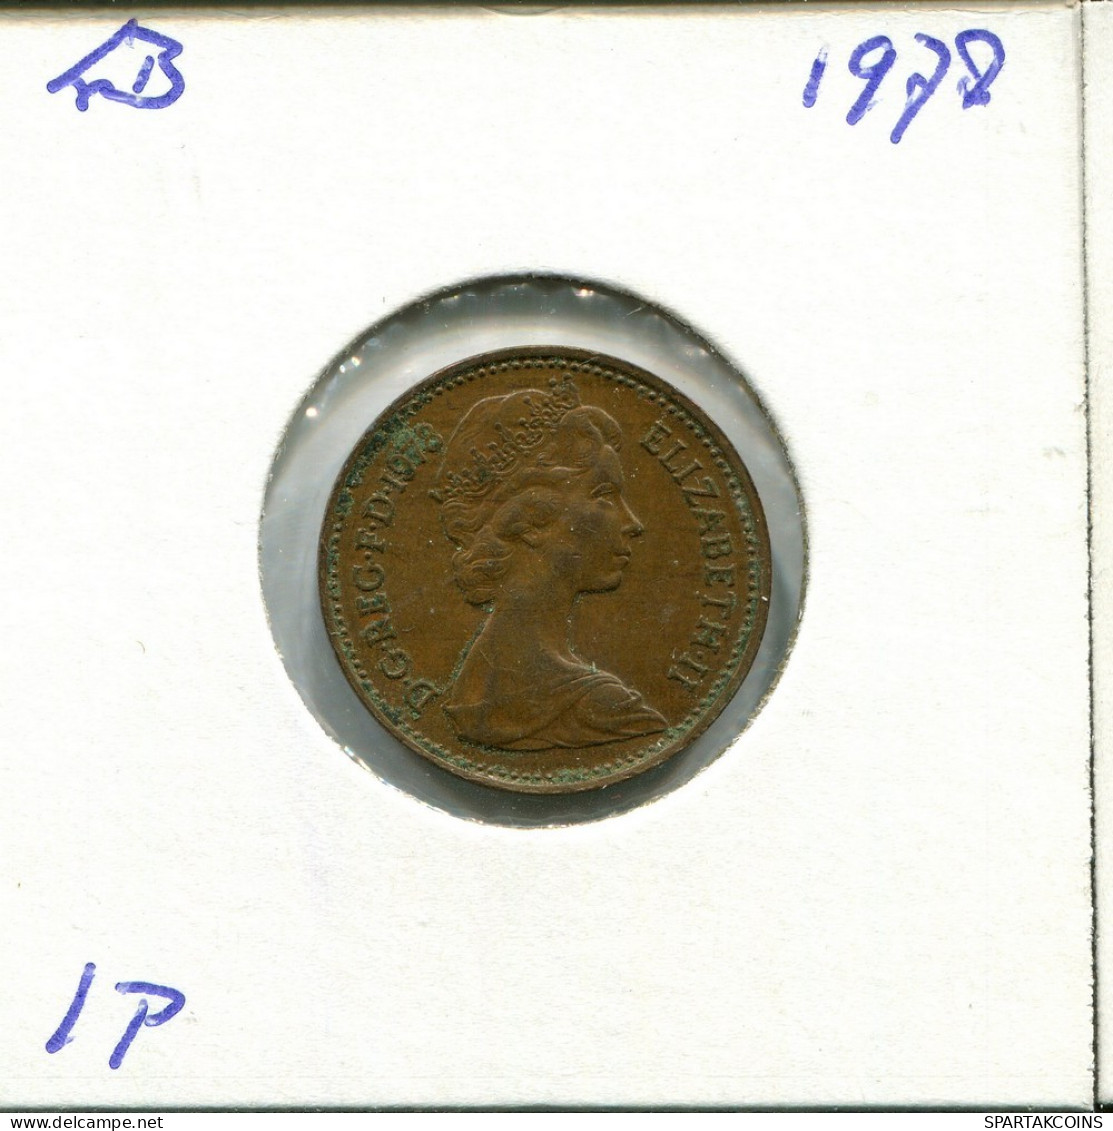 NEW PENNY 1978 UK GBAN BRETAÑA GREAT BRITAIN Moneda #AU805.E.A - 1 Penny & 1 New Penny